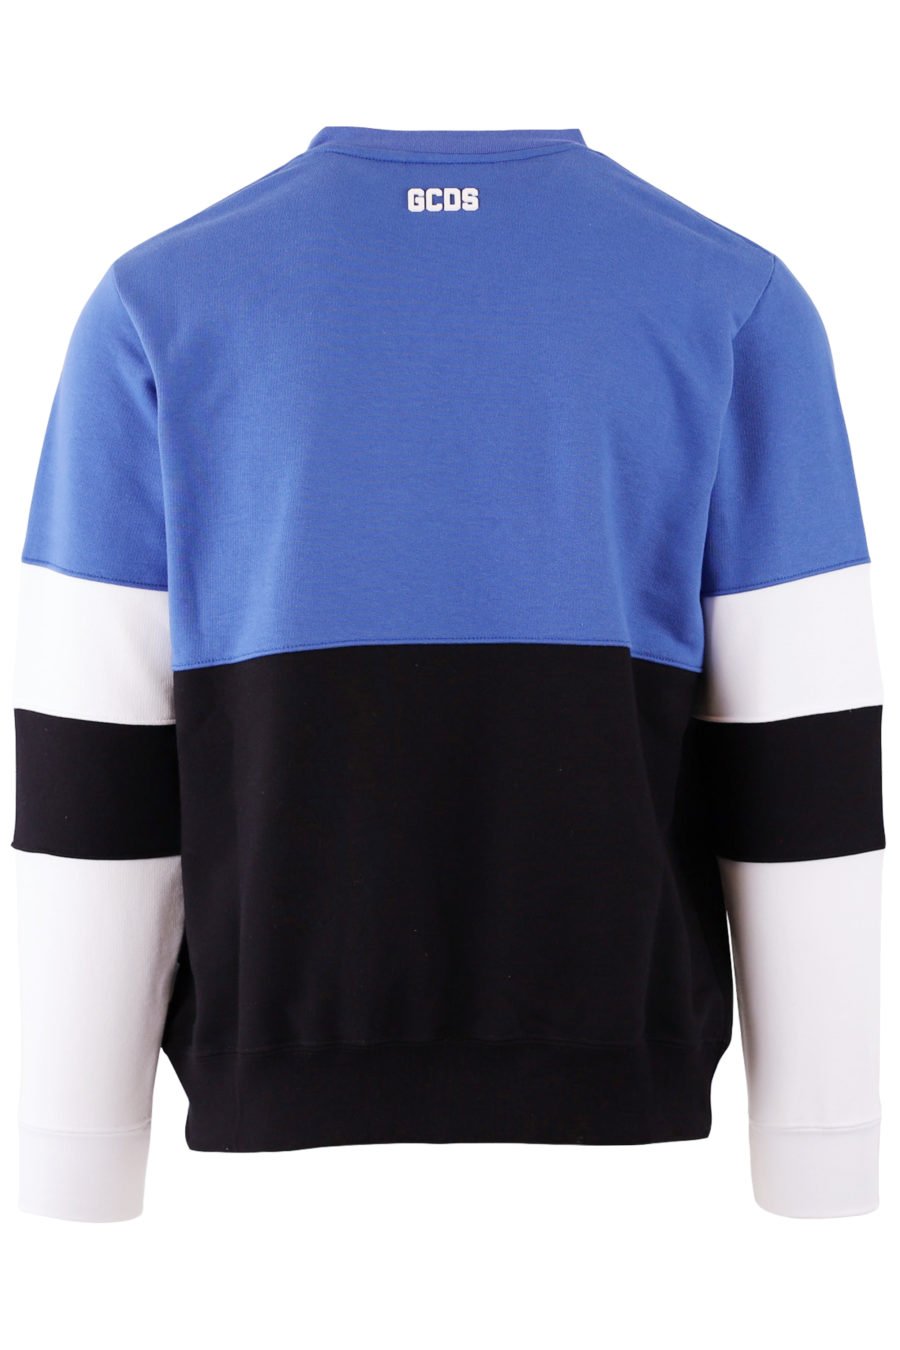 Blaues Farbblock-Sweatshirt mit Logo - IMG 7687 copy